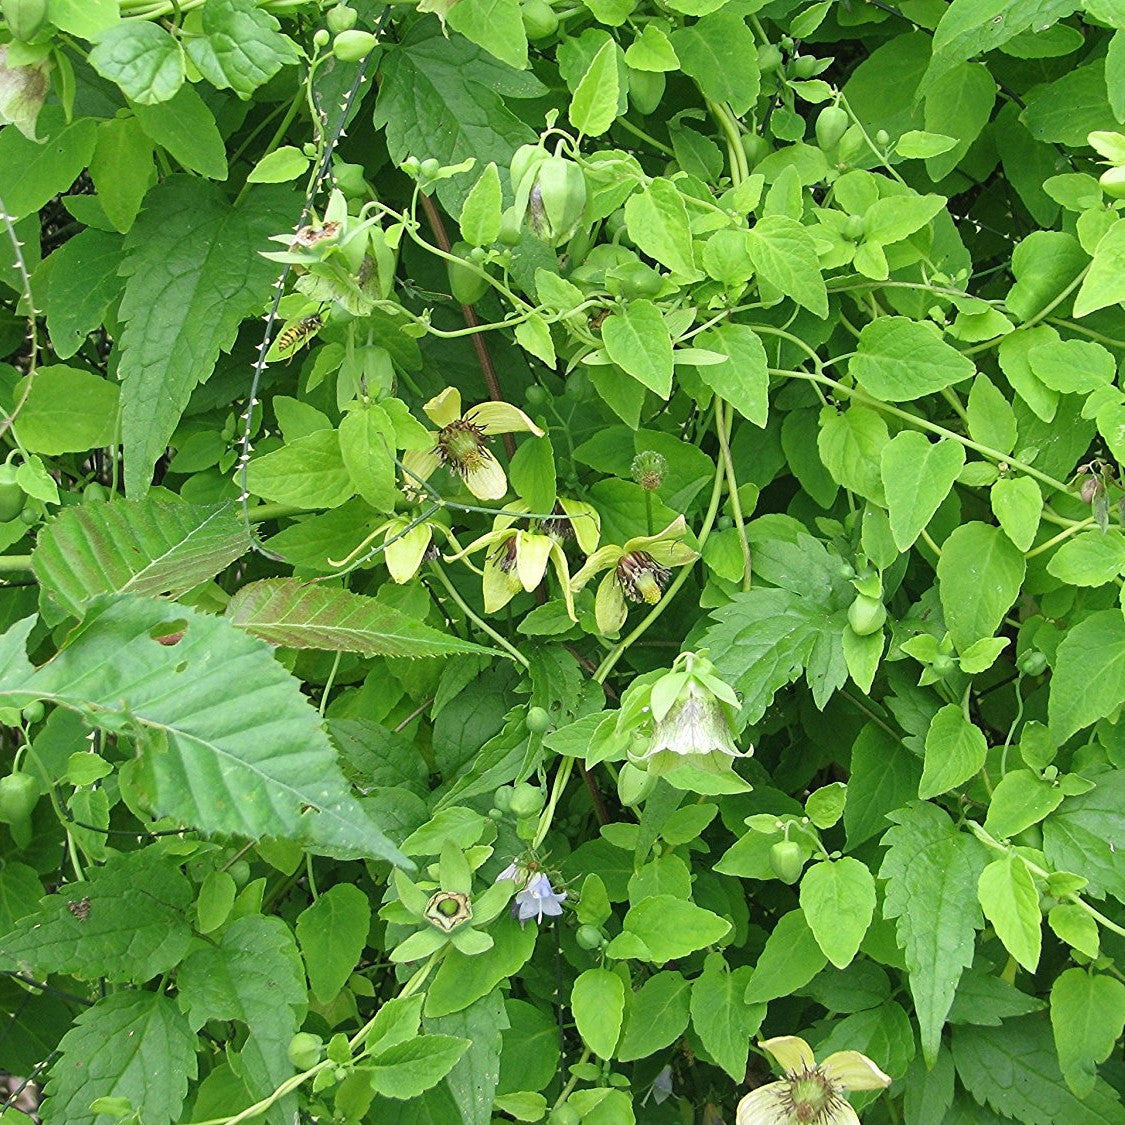 Codonopsis Seeds (Codonopsis pilosula)